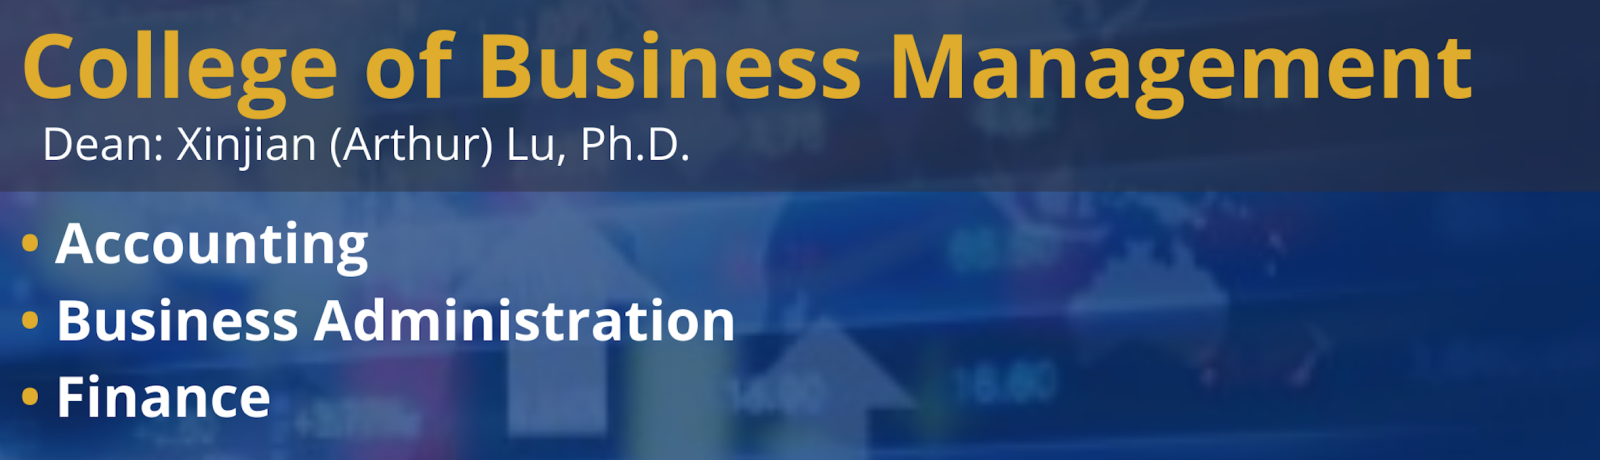 College of Business Management - Dean: Xinjian (Arthur) Lu, Ph.D. - Accounting, Business Administration, Finance